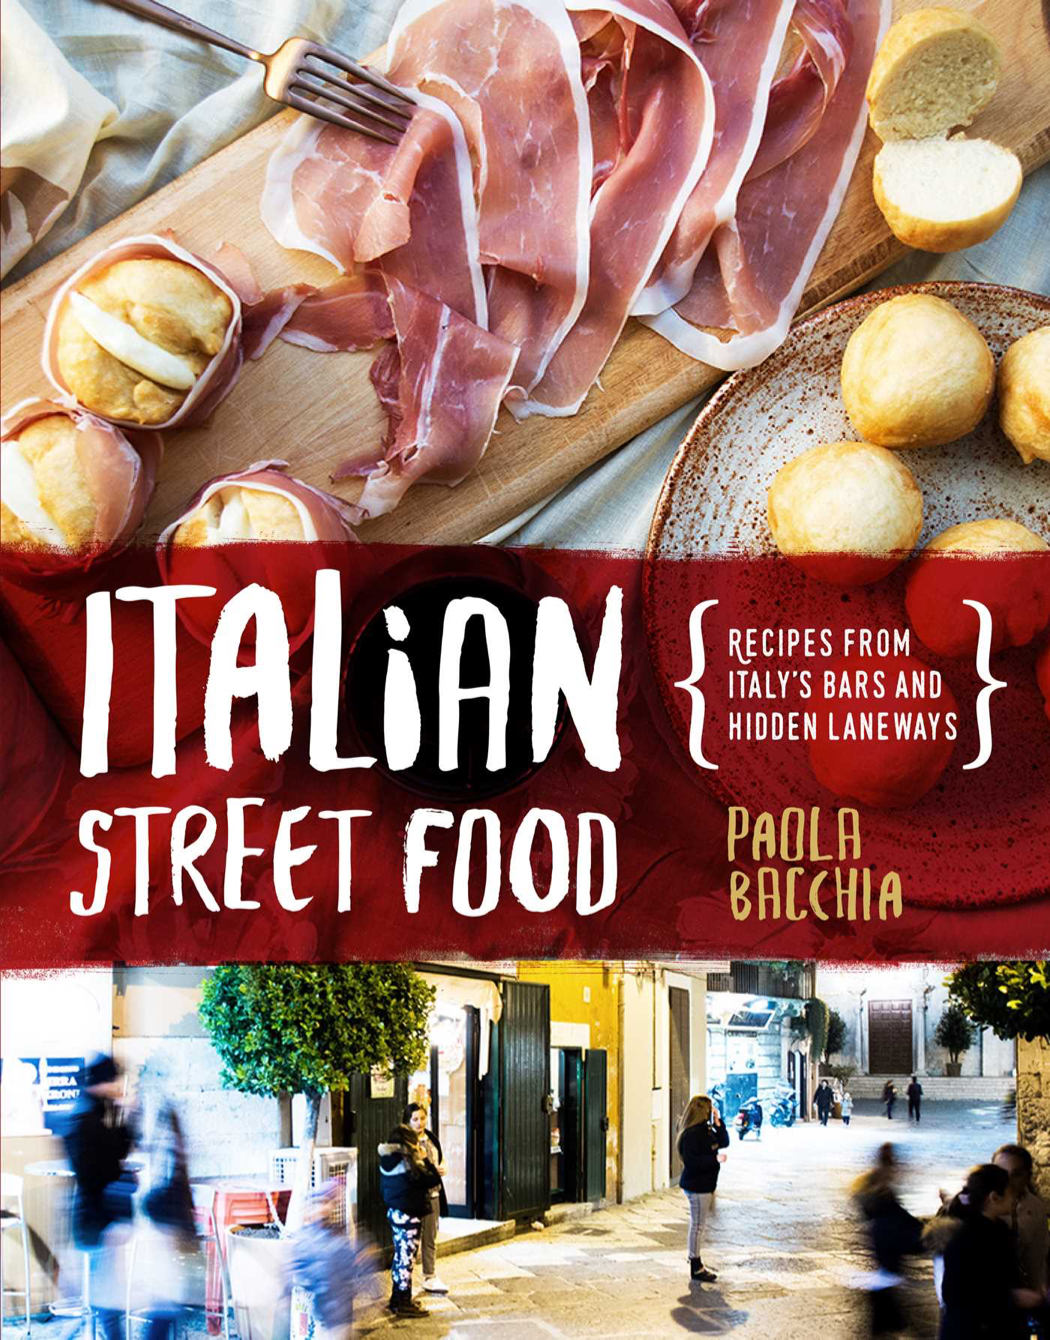 Italian Street Food by Paola Bacchia